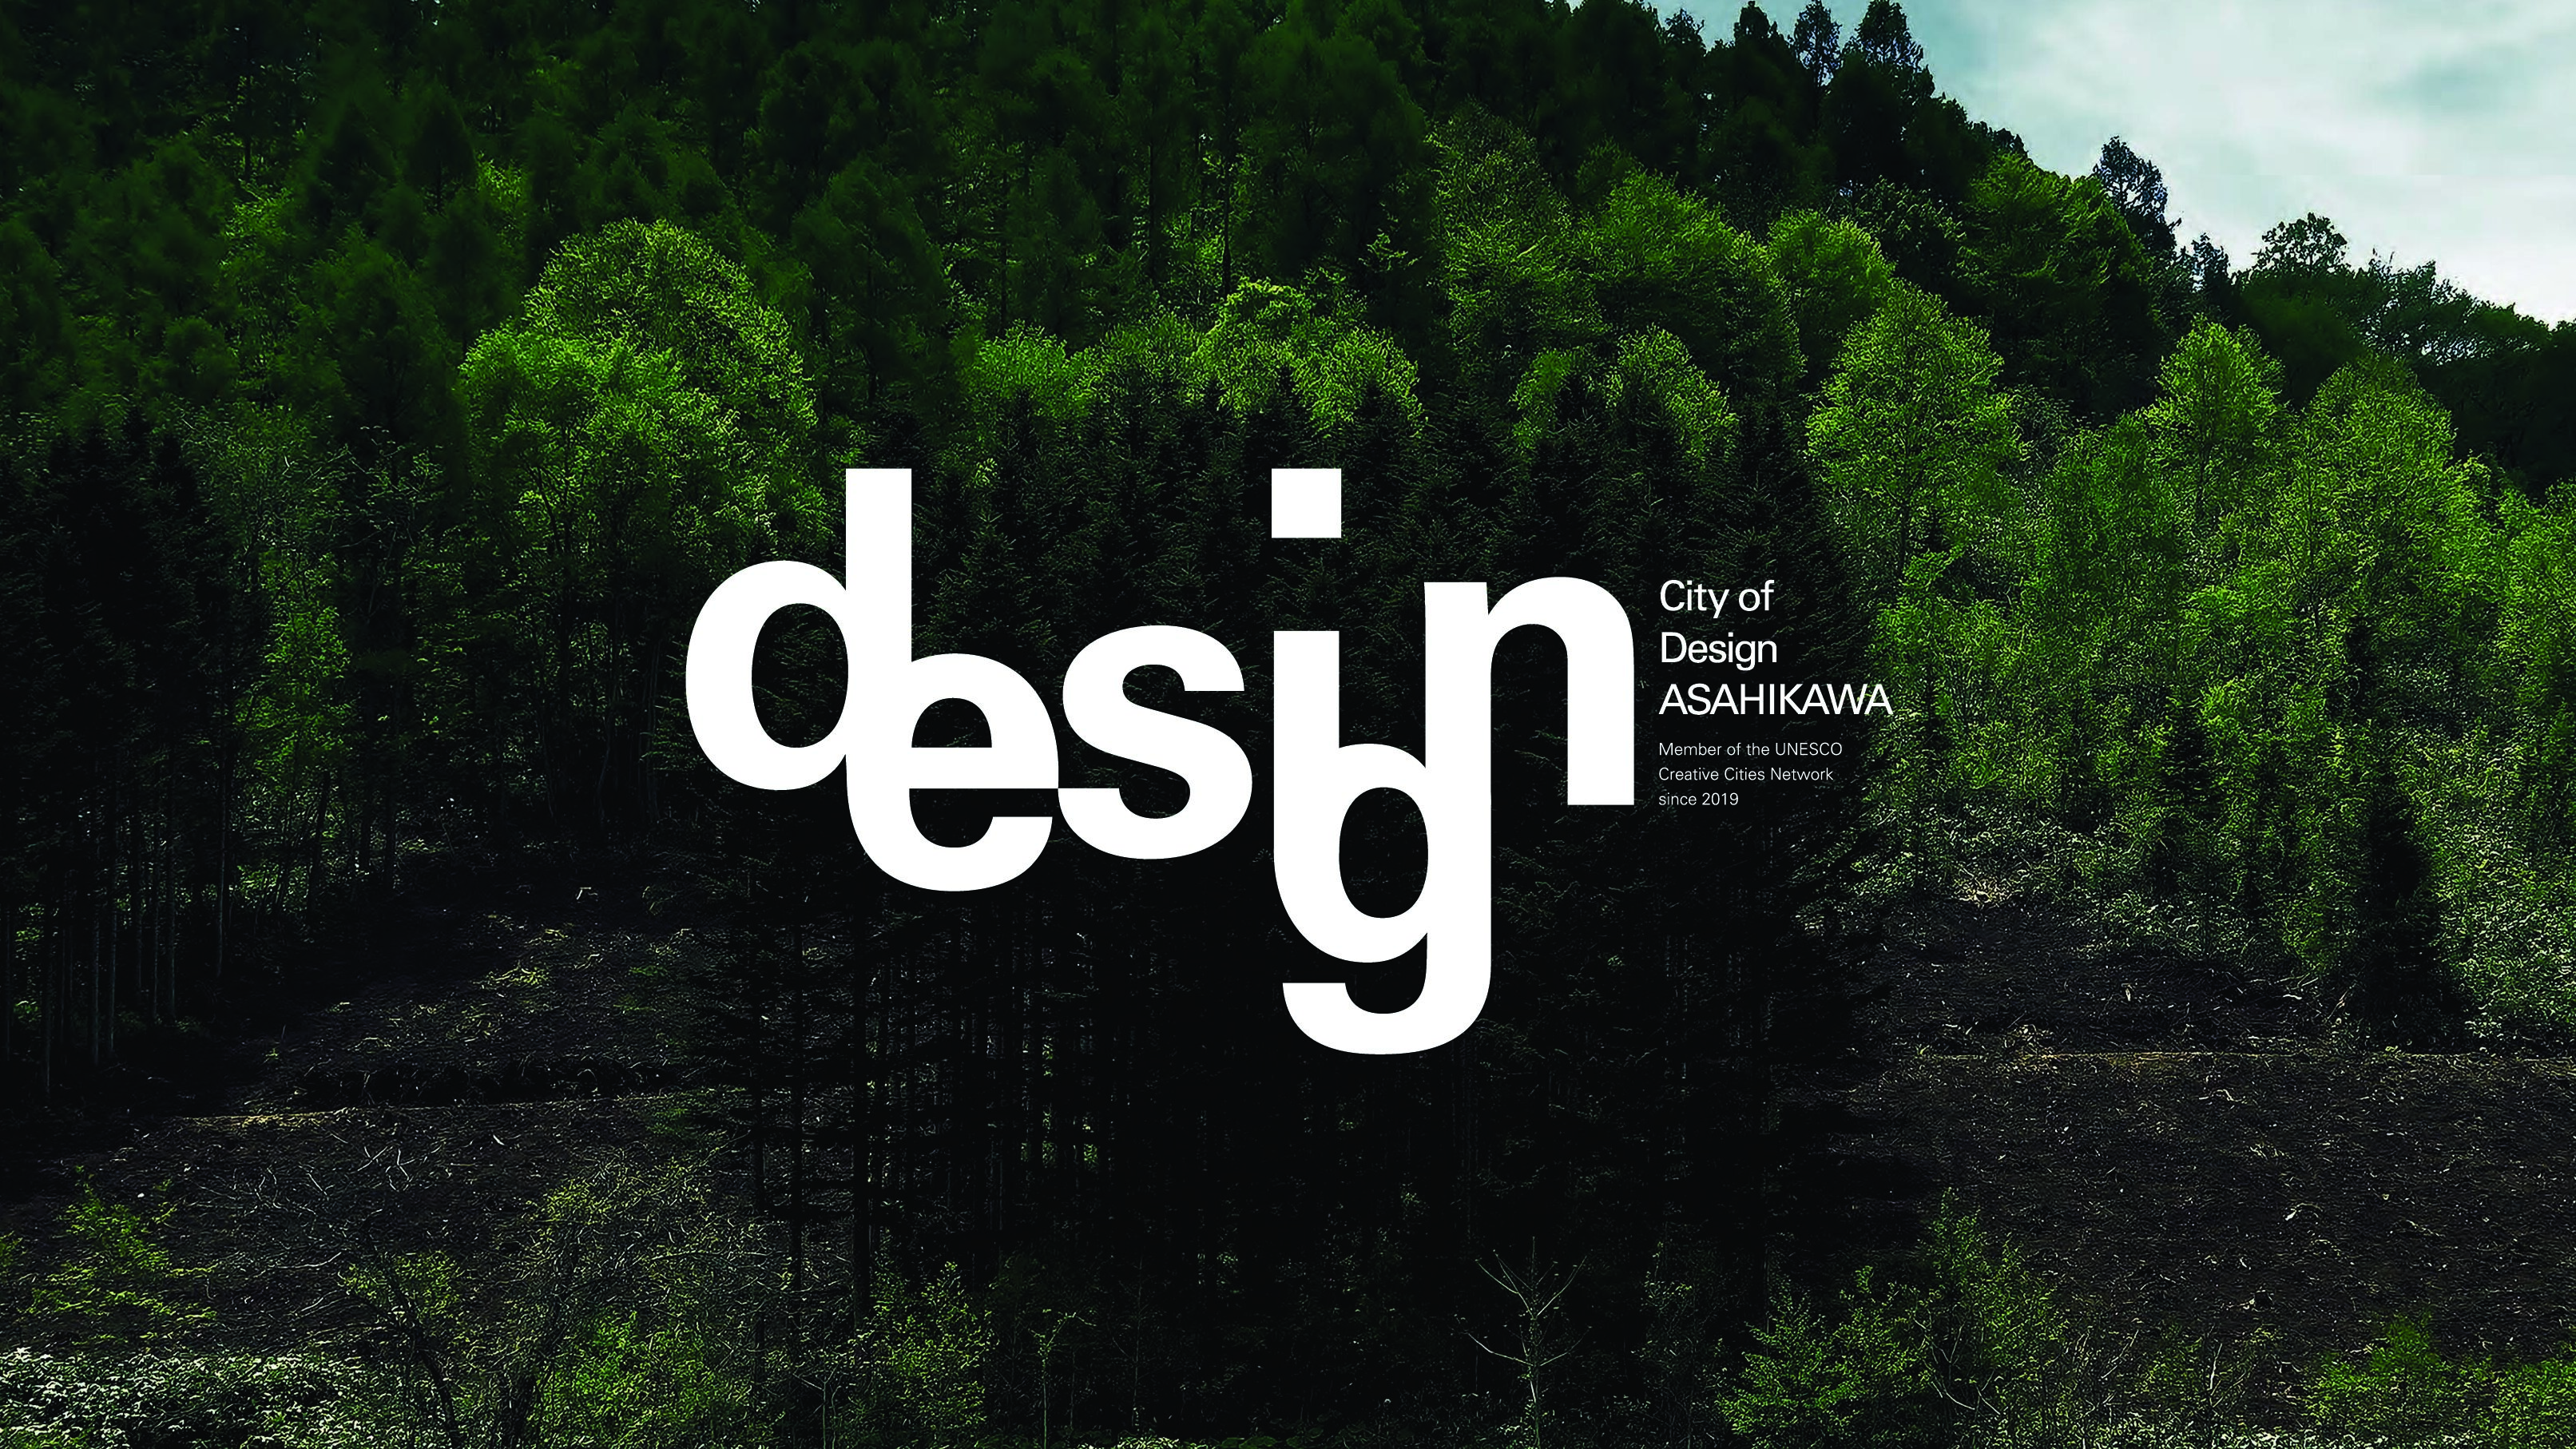 City of Design ASAHIKAWA Promotional video | full long version｜ユネスコ・デザイン都市旭川 （プロモーションムービー・ロング版／動画）